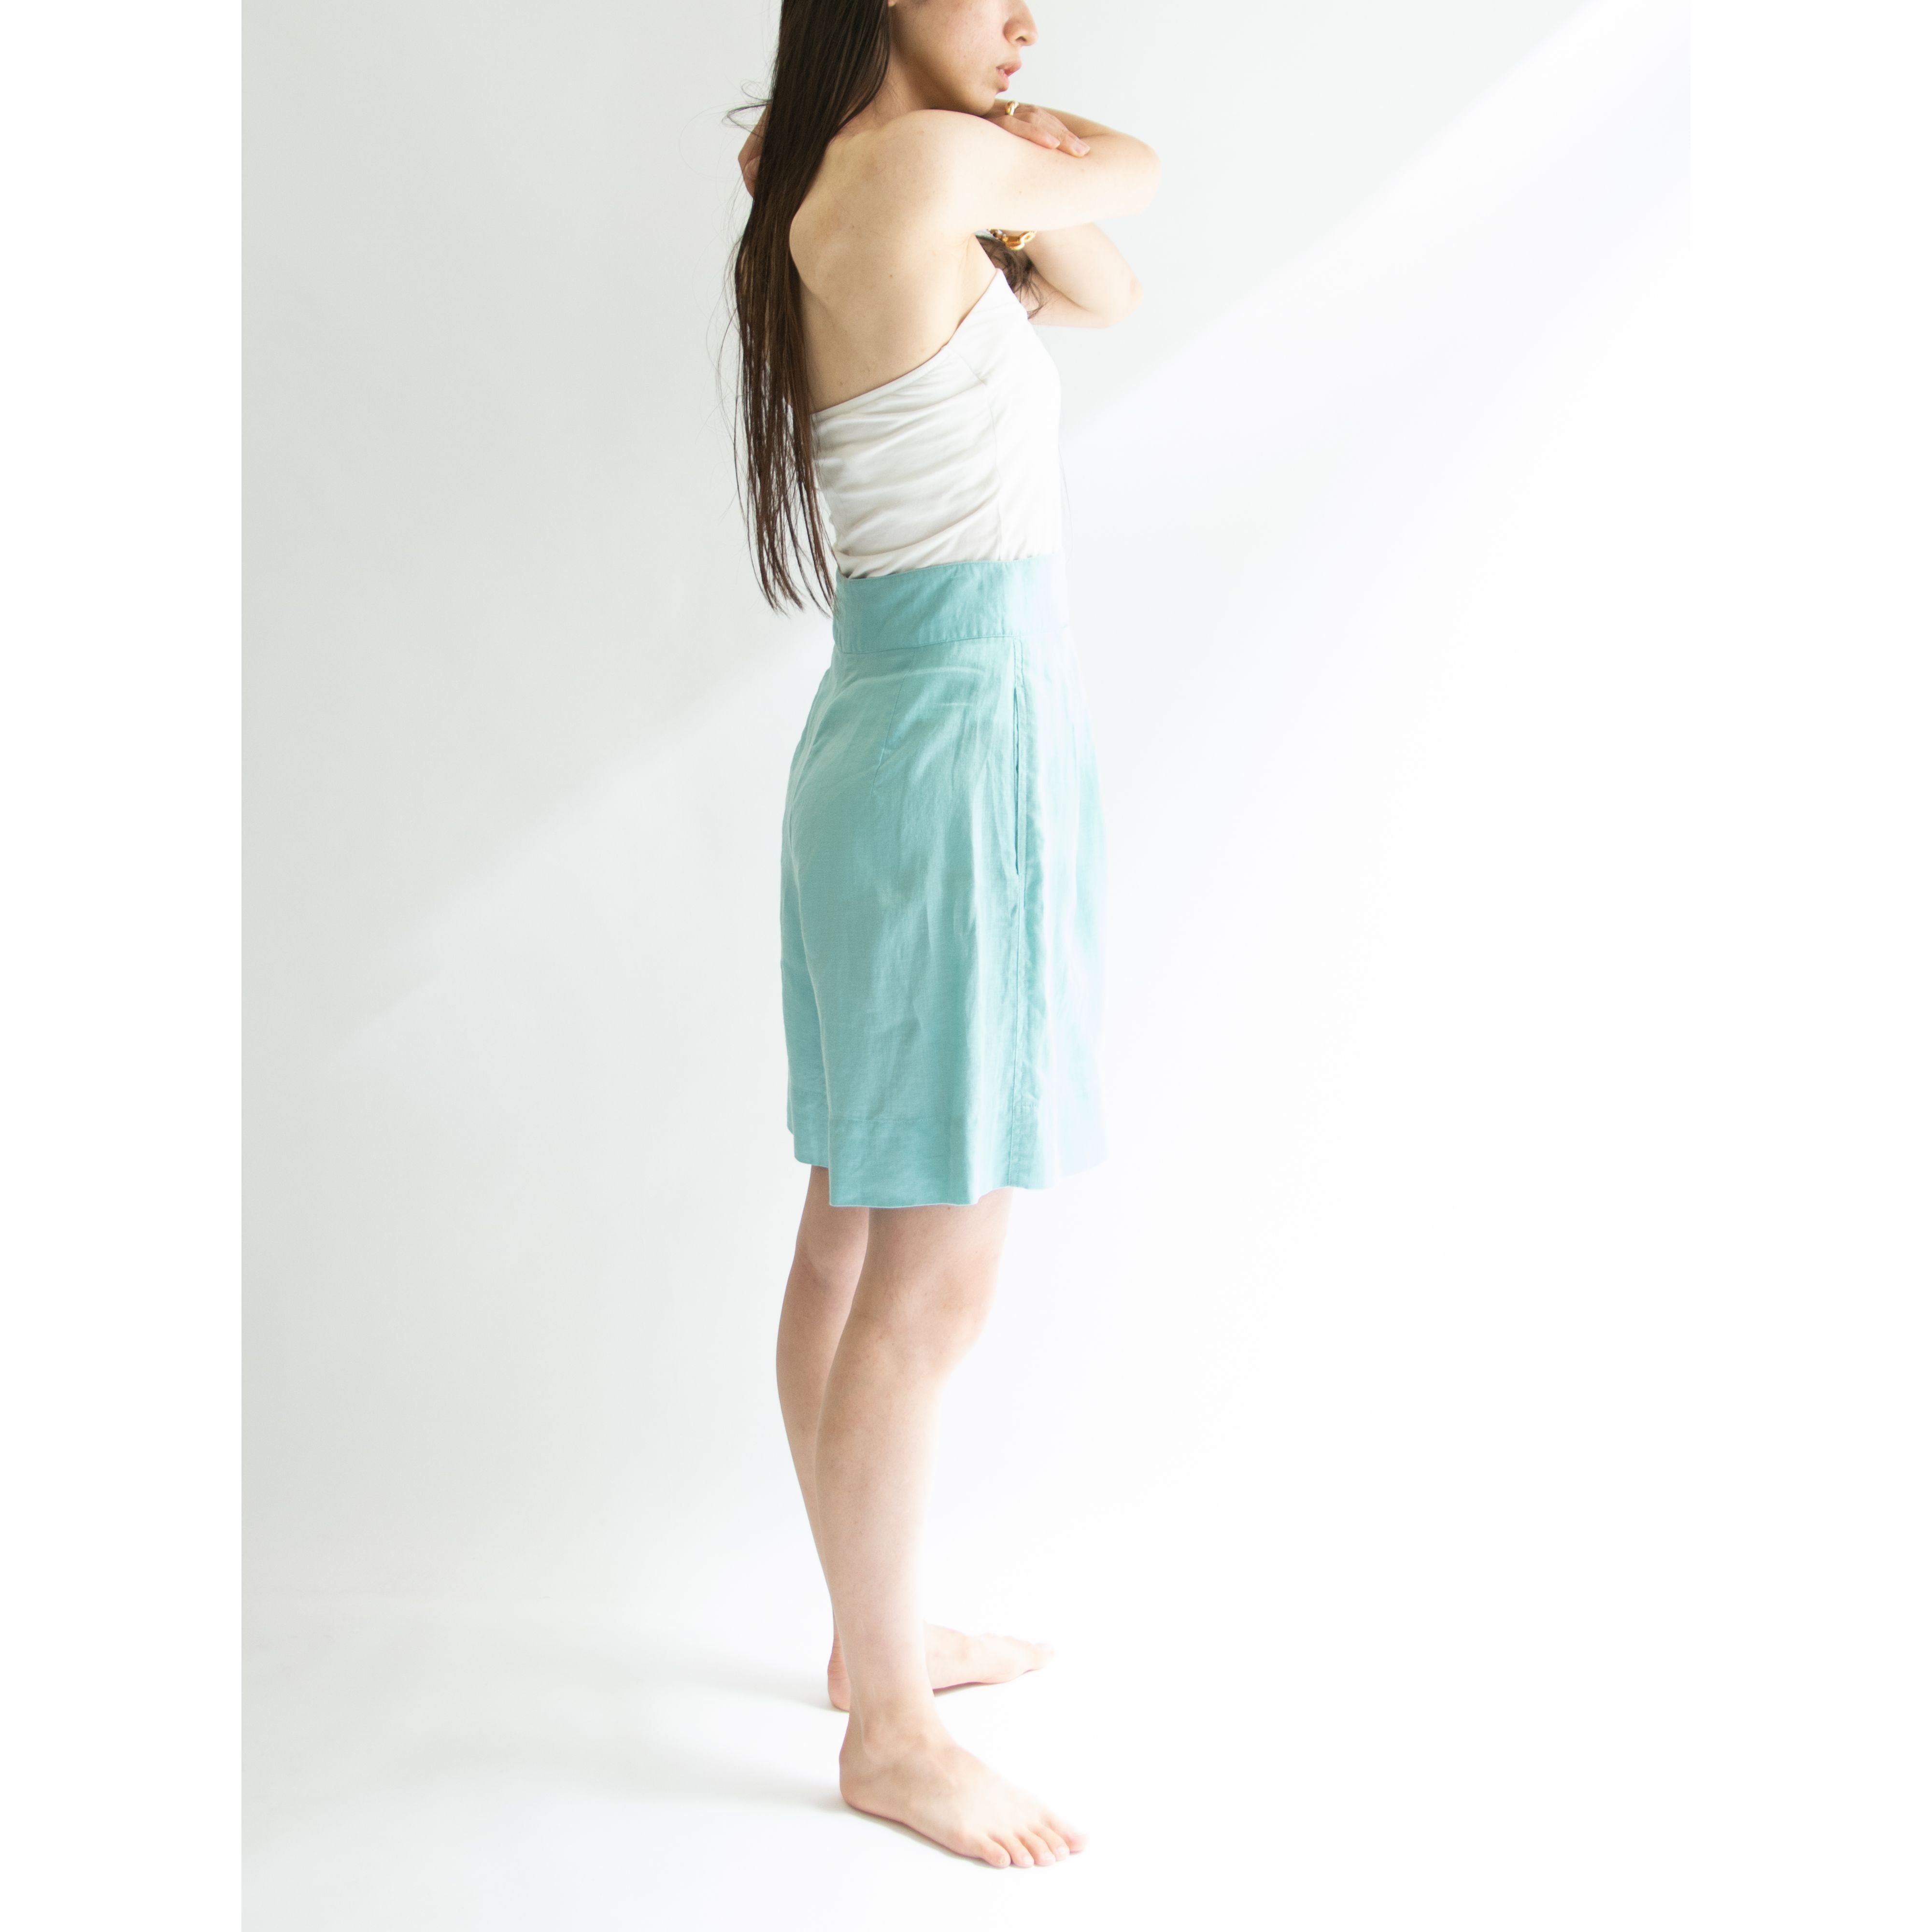 【Calvin Klein】100% Linen Gurkha Shorts（カルバンクライン リネングルカショーツ ショートパンツ）